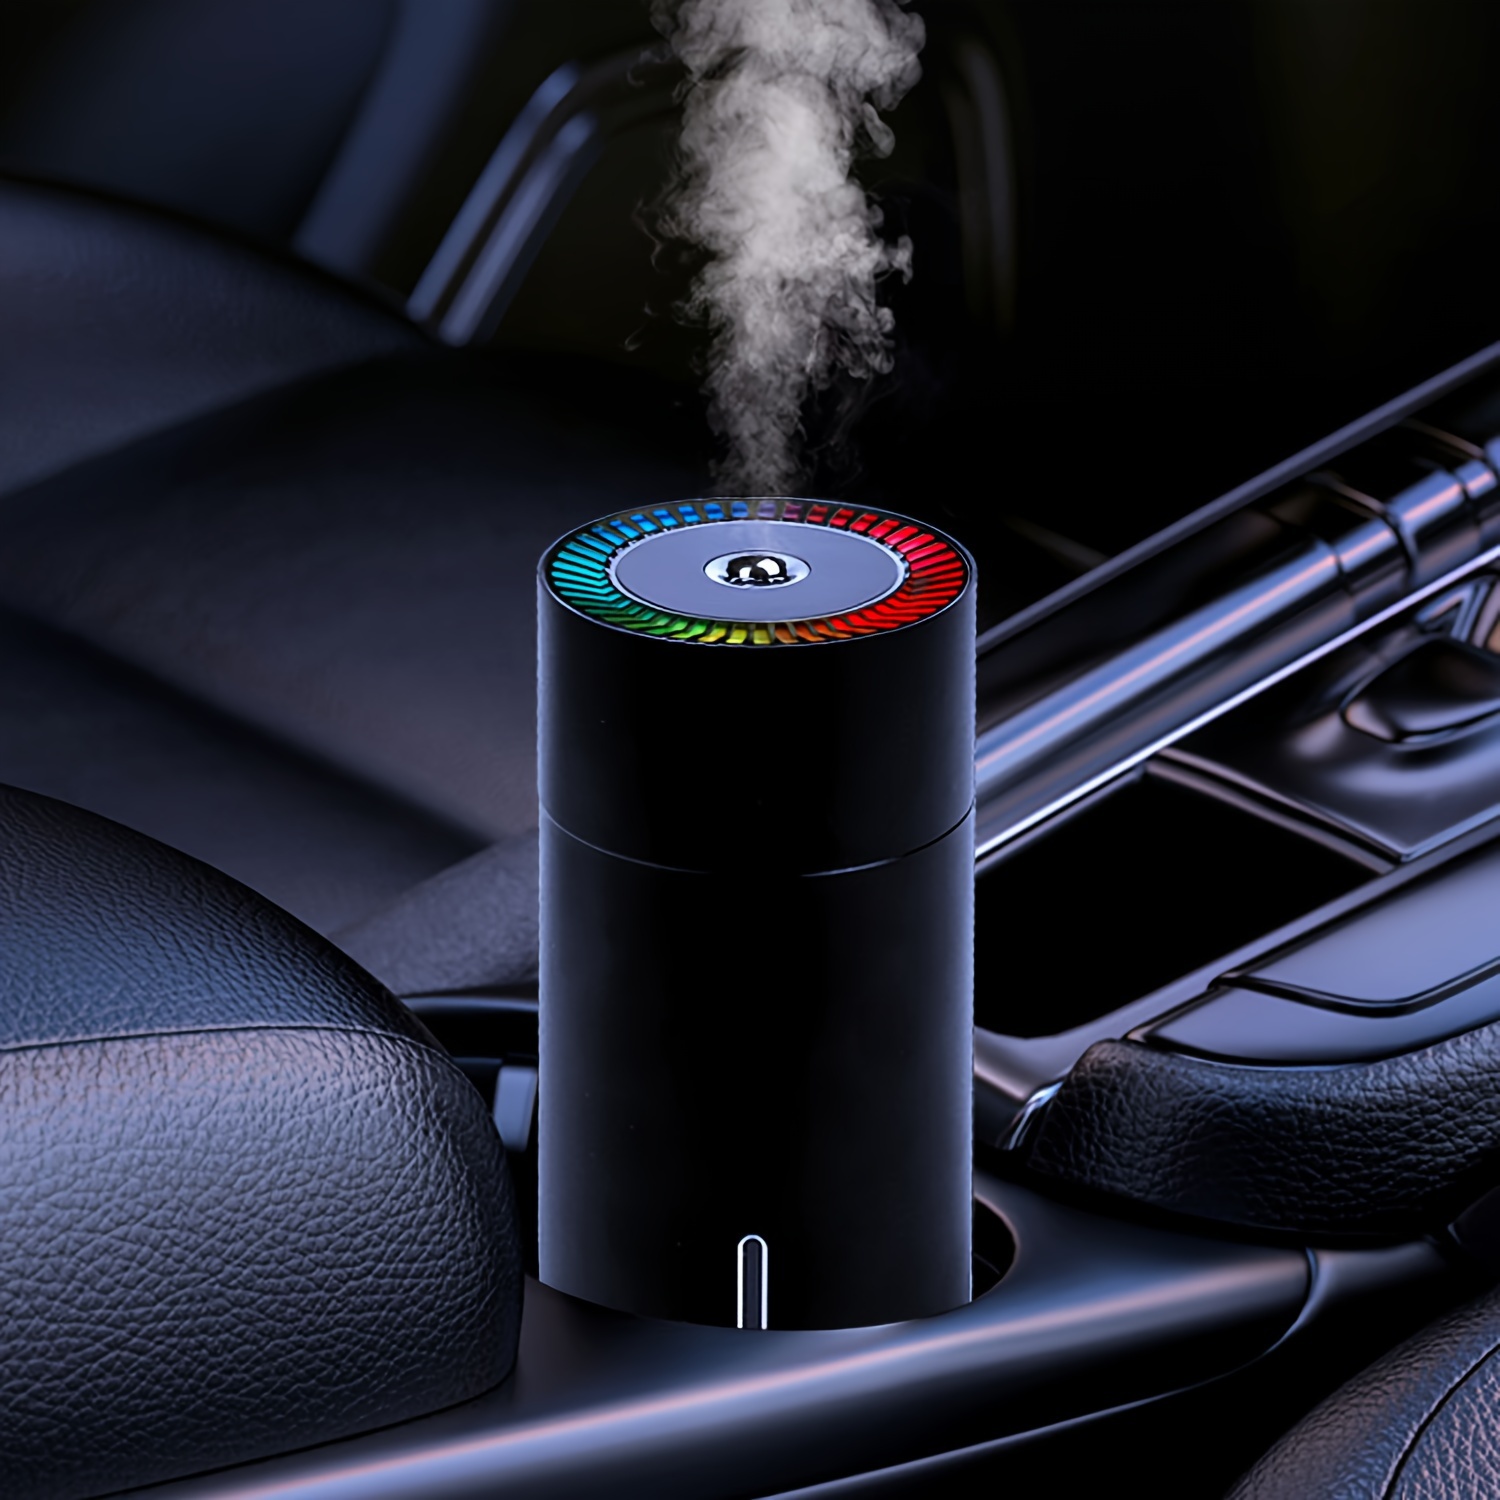  Mini humidificador humidificador de coche Cool Mist Fragancia  aromaterapia USB con luz nocturna LED para coche, oficina en casa (blanco)  : Automotriz